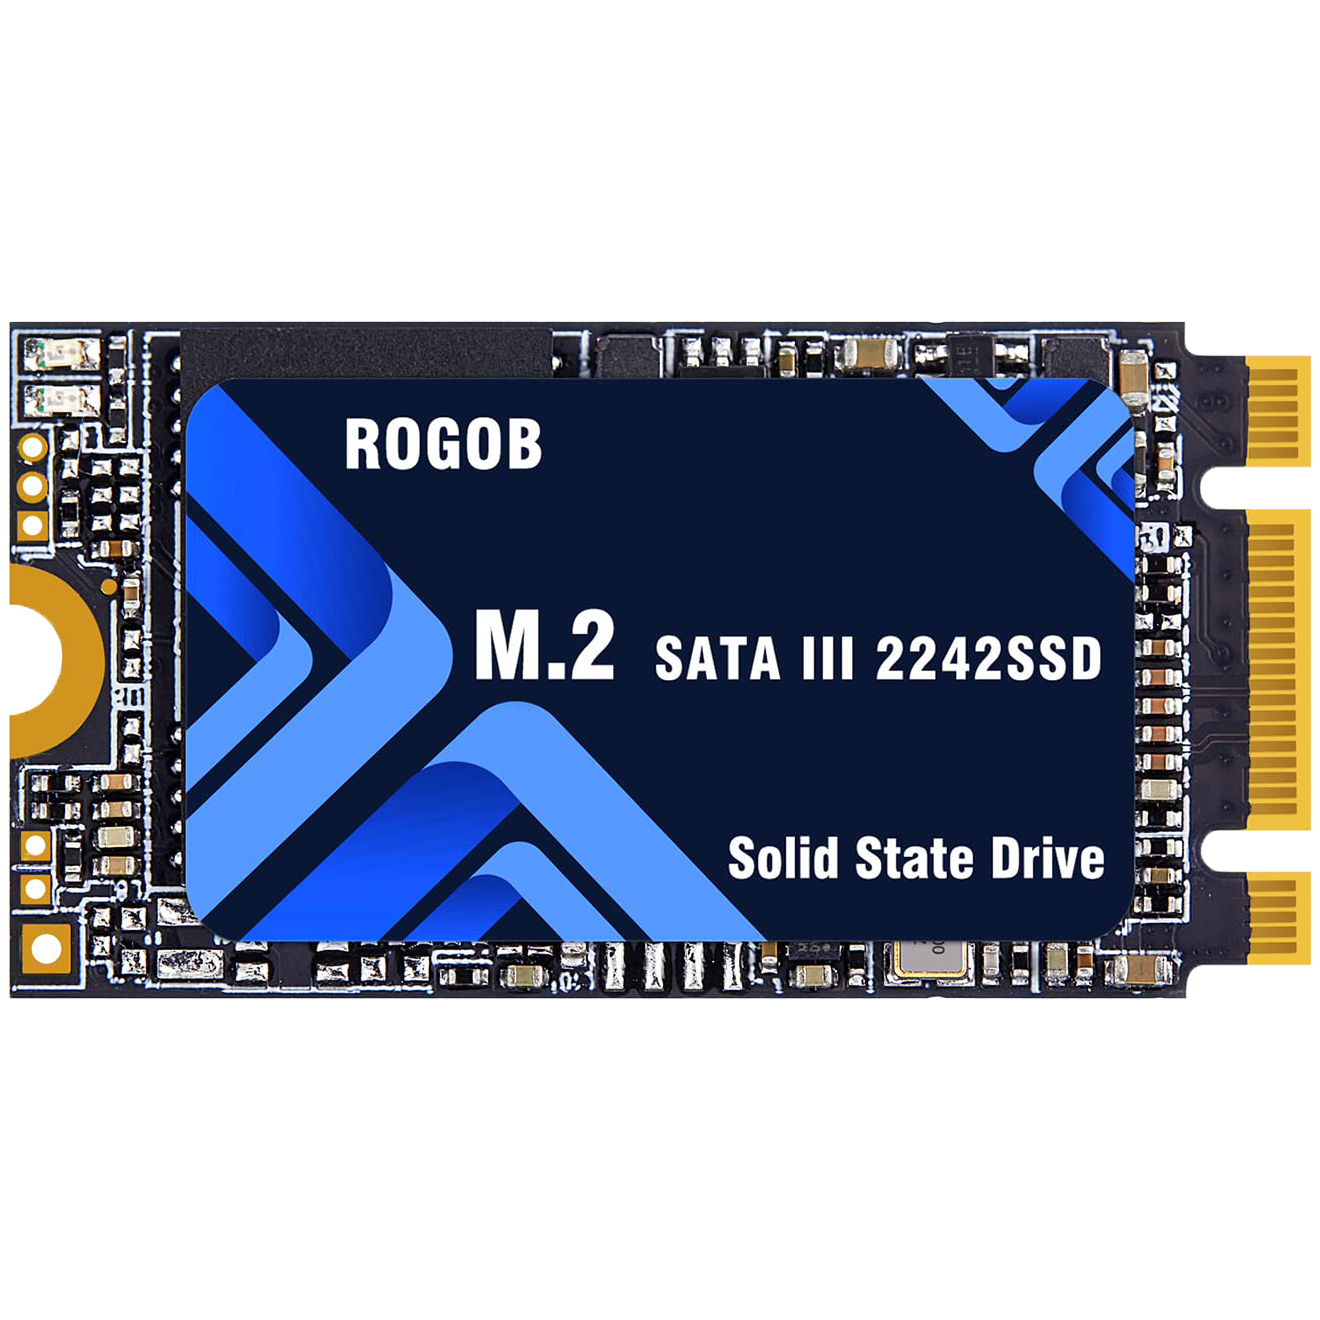 ROGOB M.2 2242 SATA SSD